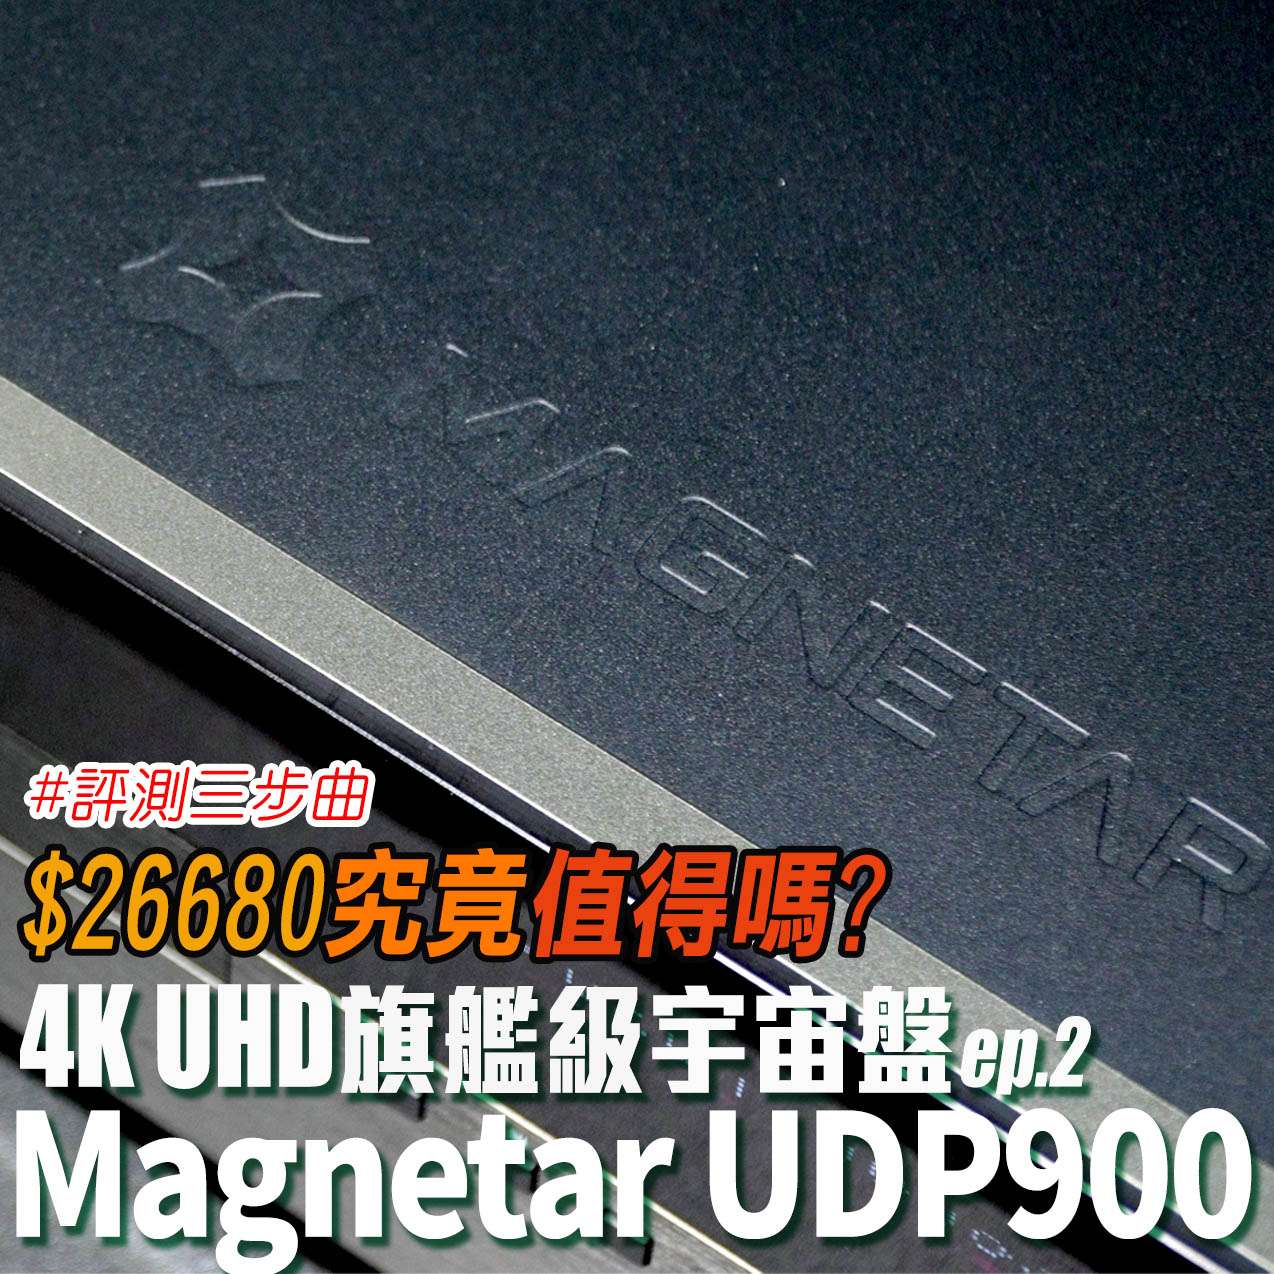 Magnetar UDP900 unbox IG ep2 copy.jpg